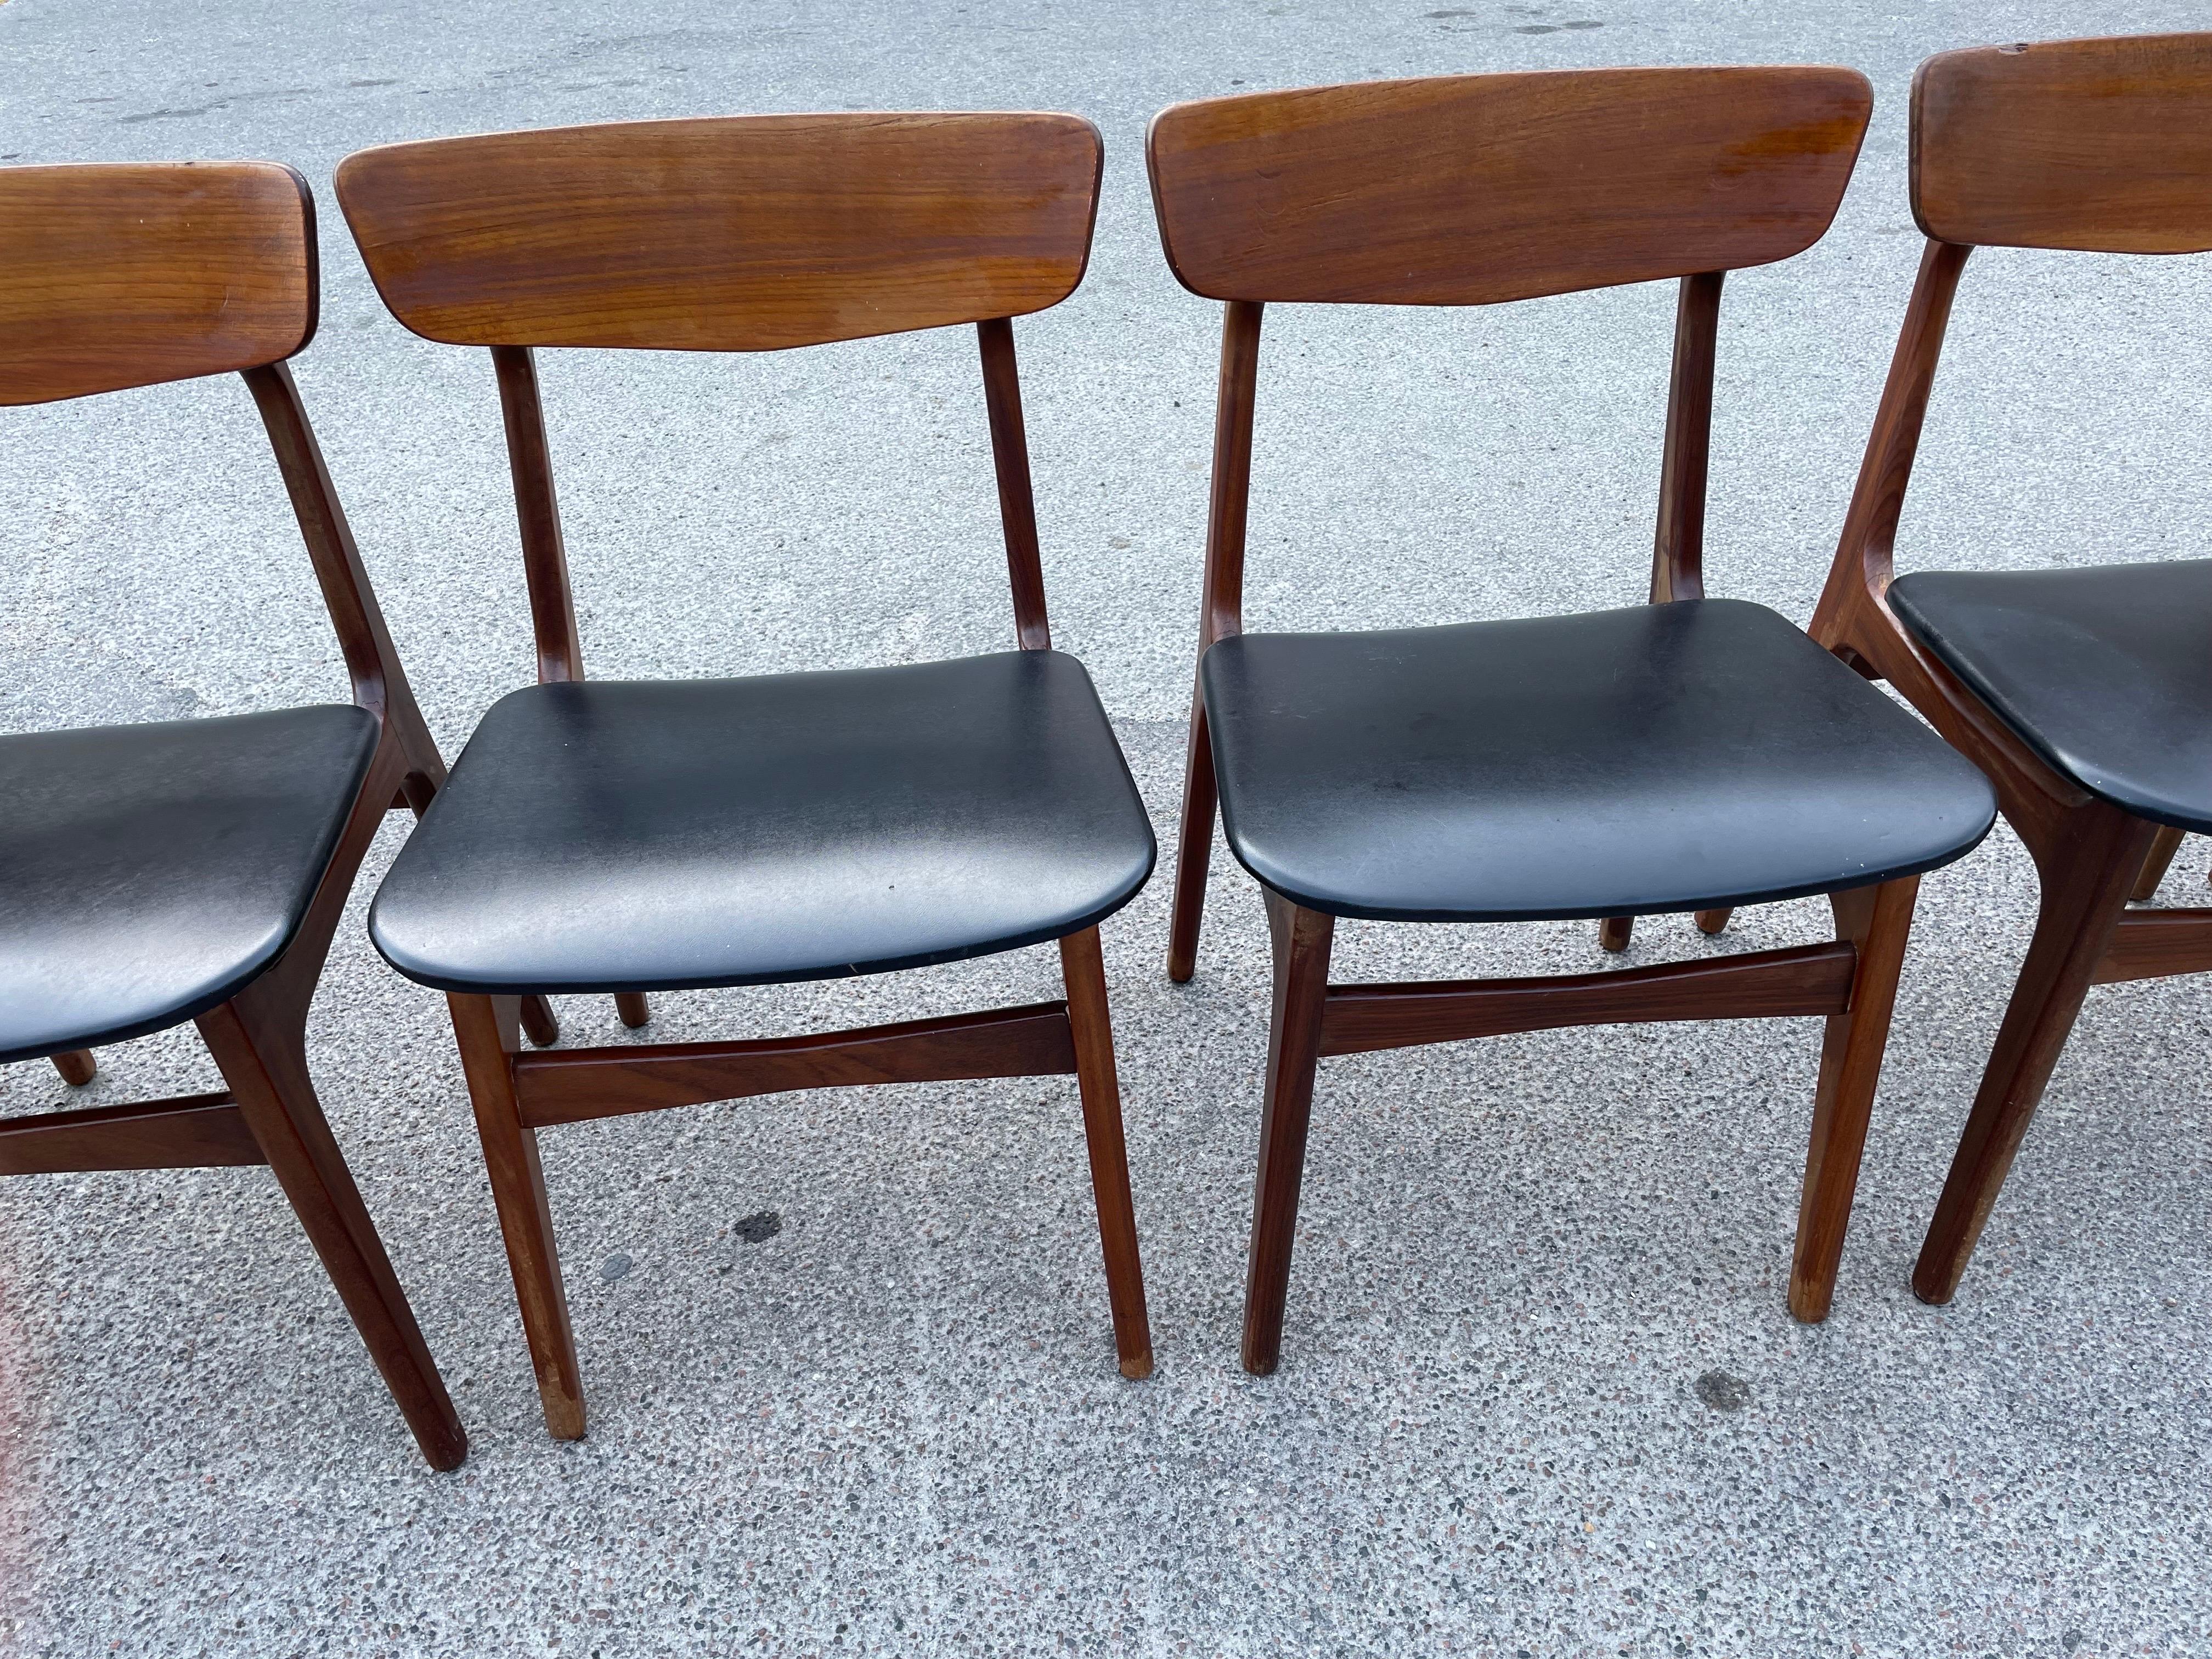 Set of 6 Midcentury Danish Chairs in Teak by Schiønning & Elgaard, 1960s For Sale 3